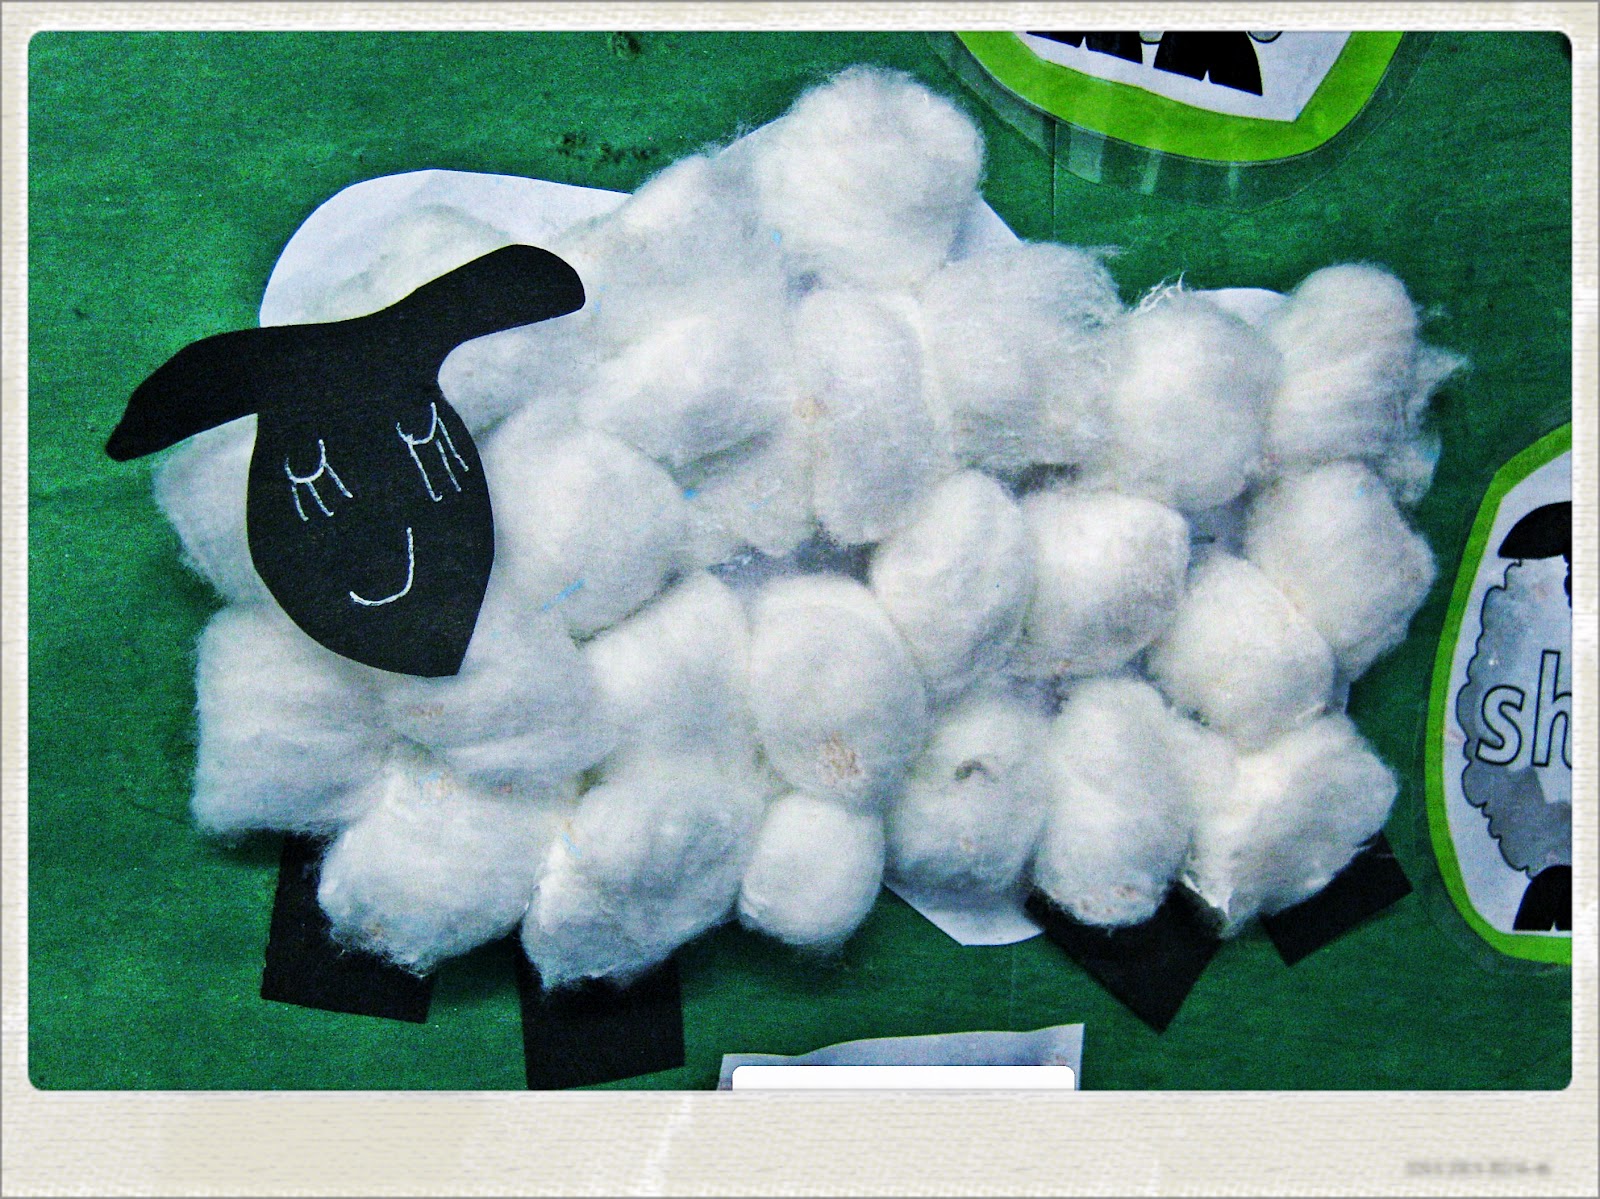 Start at 5: Sh, sh, sh, Our Sheep are Asleep